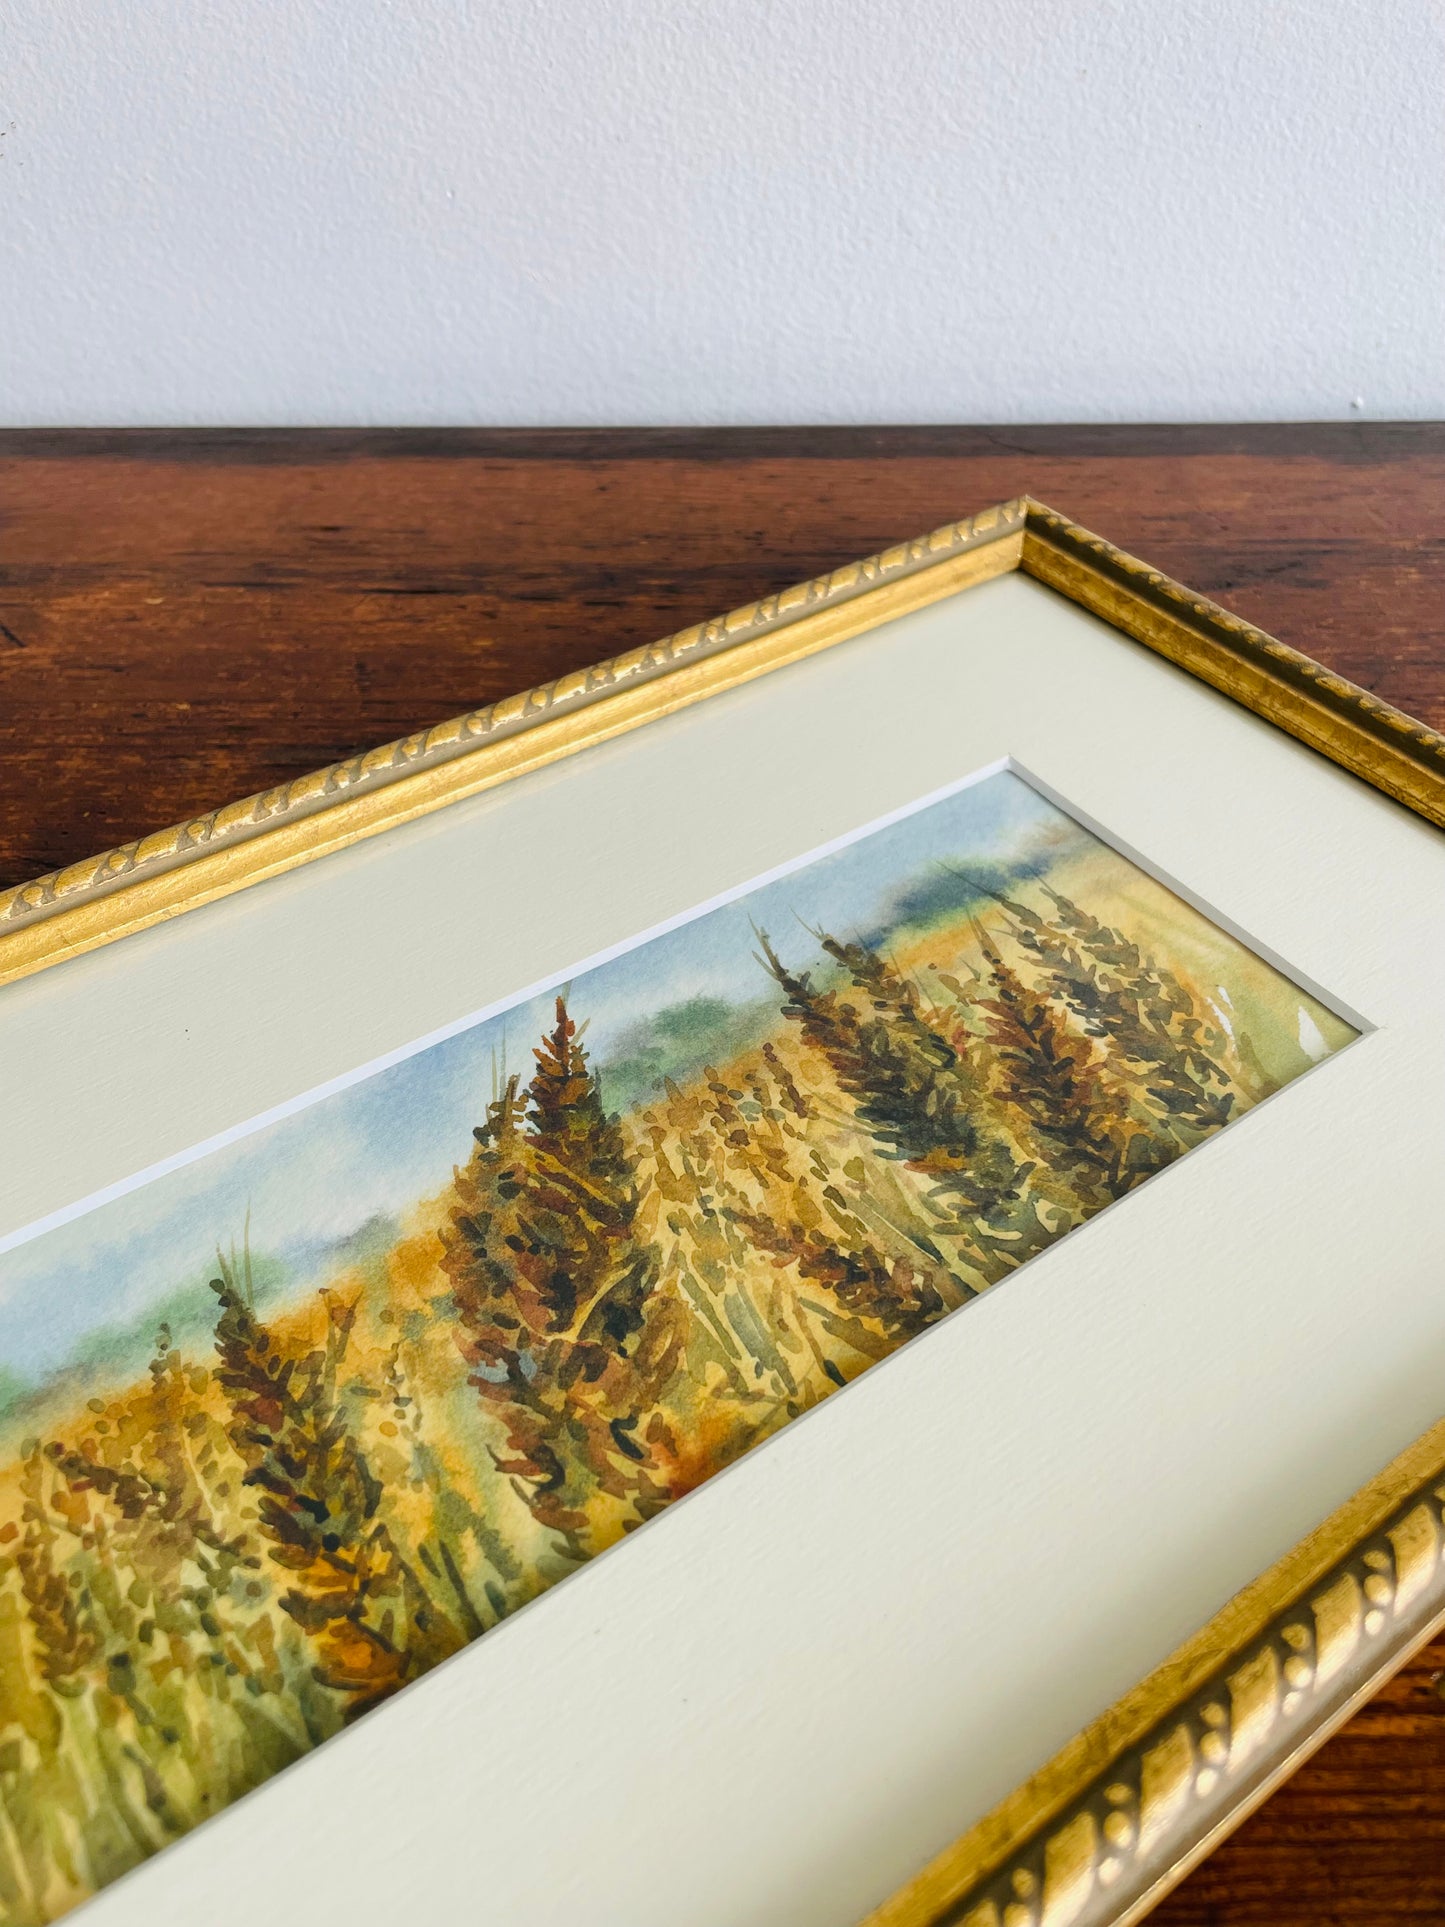 Original Art - Golden Wheat Field Watercolour Painting - Signed by Arlene Saunders of Oakville, Ontario